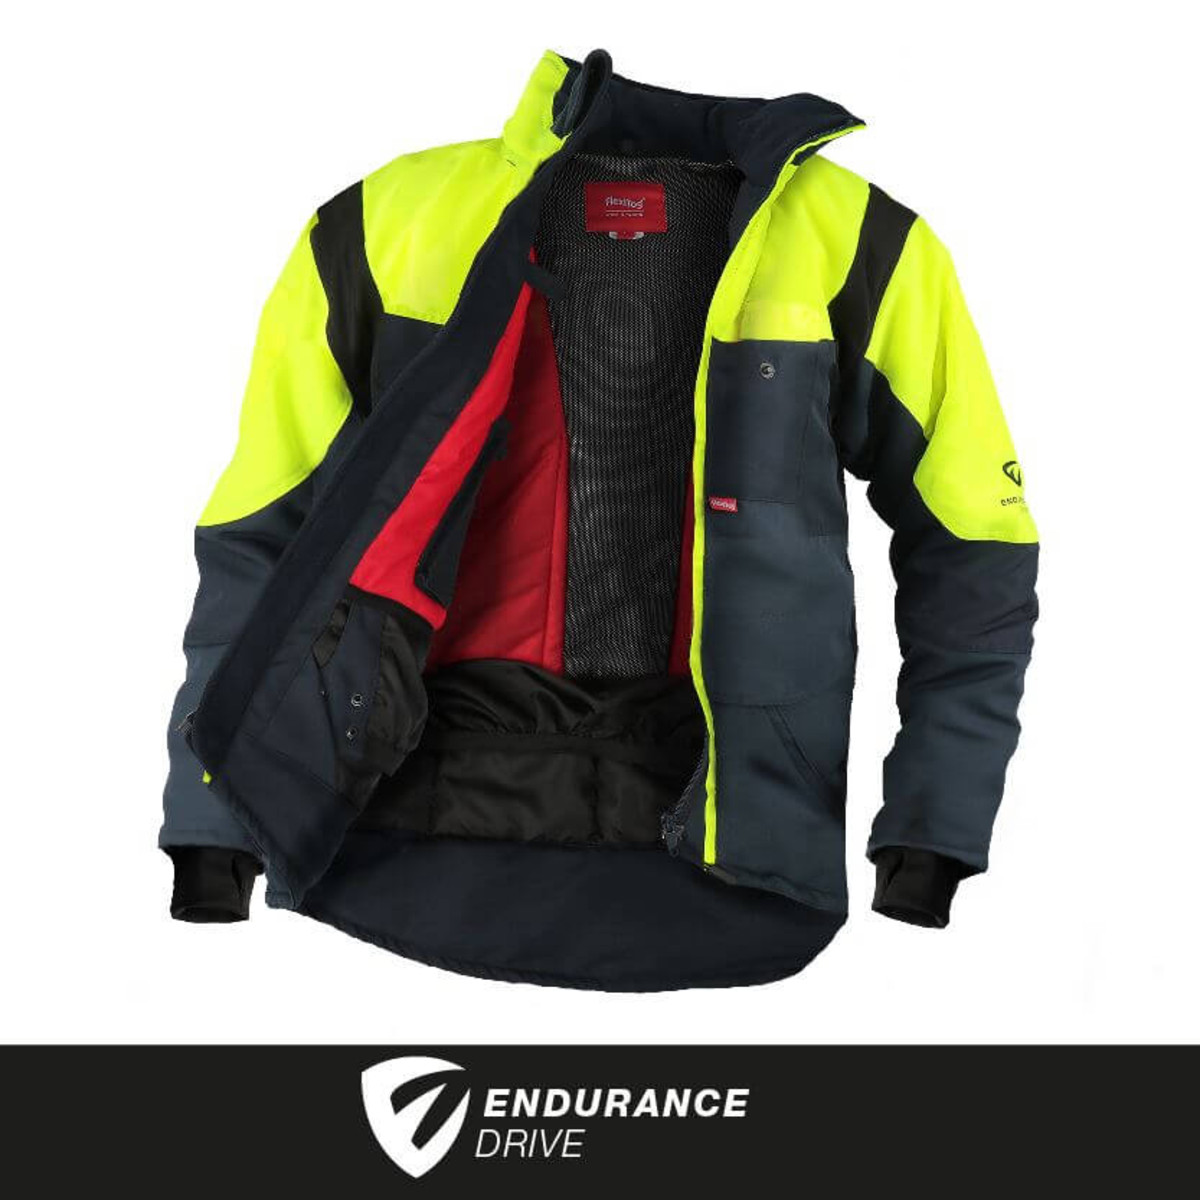 Flexitog Endurance Drive Jacket